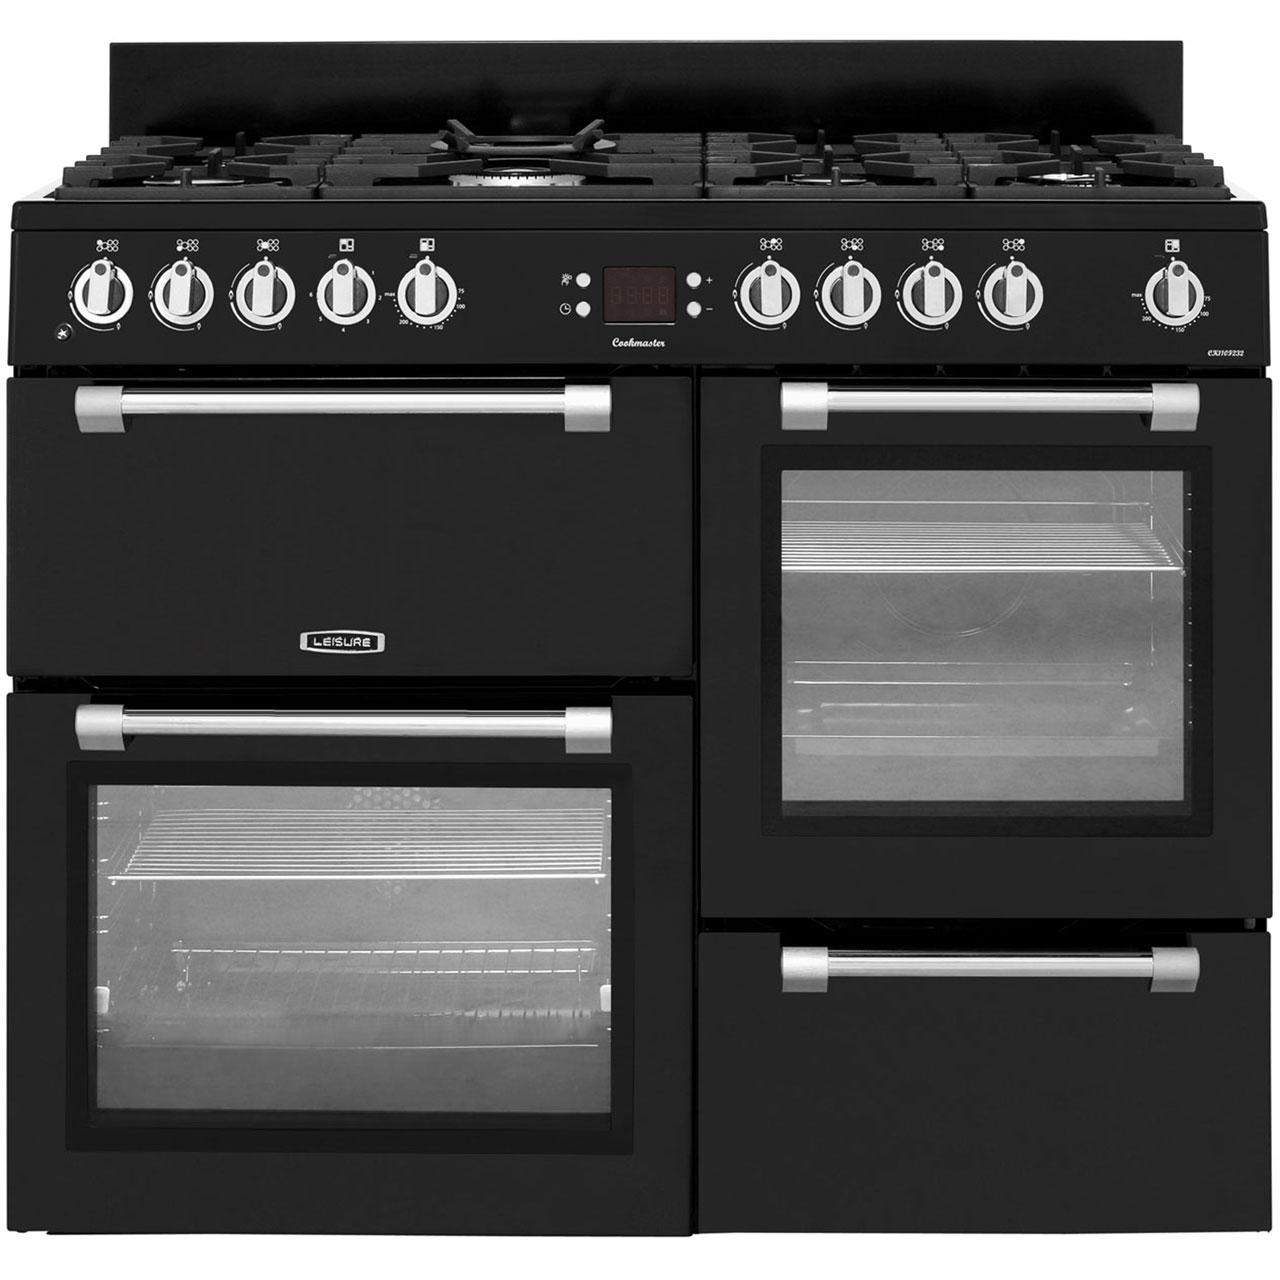 Leisure Cookmaster CK110F232K 110cm Dual Fuel Range Cooker - Black - A/A Rated, Black